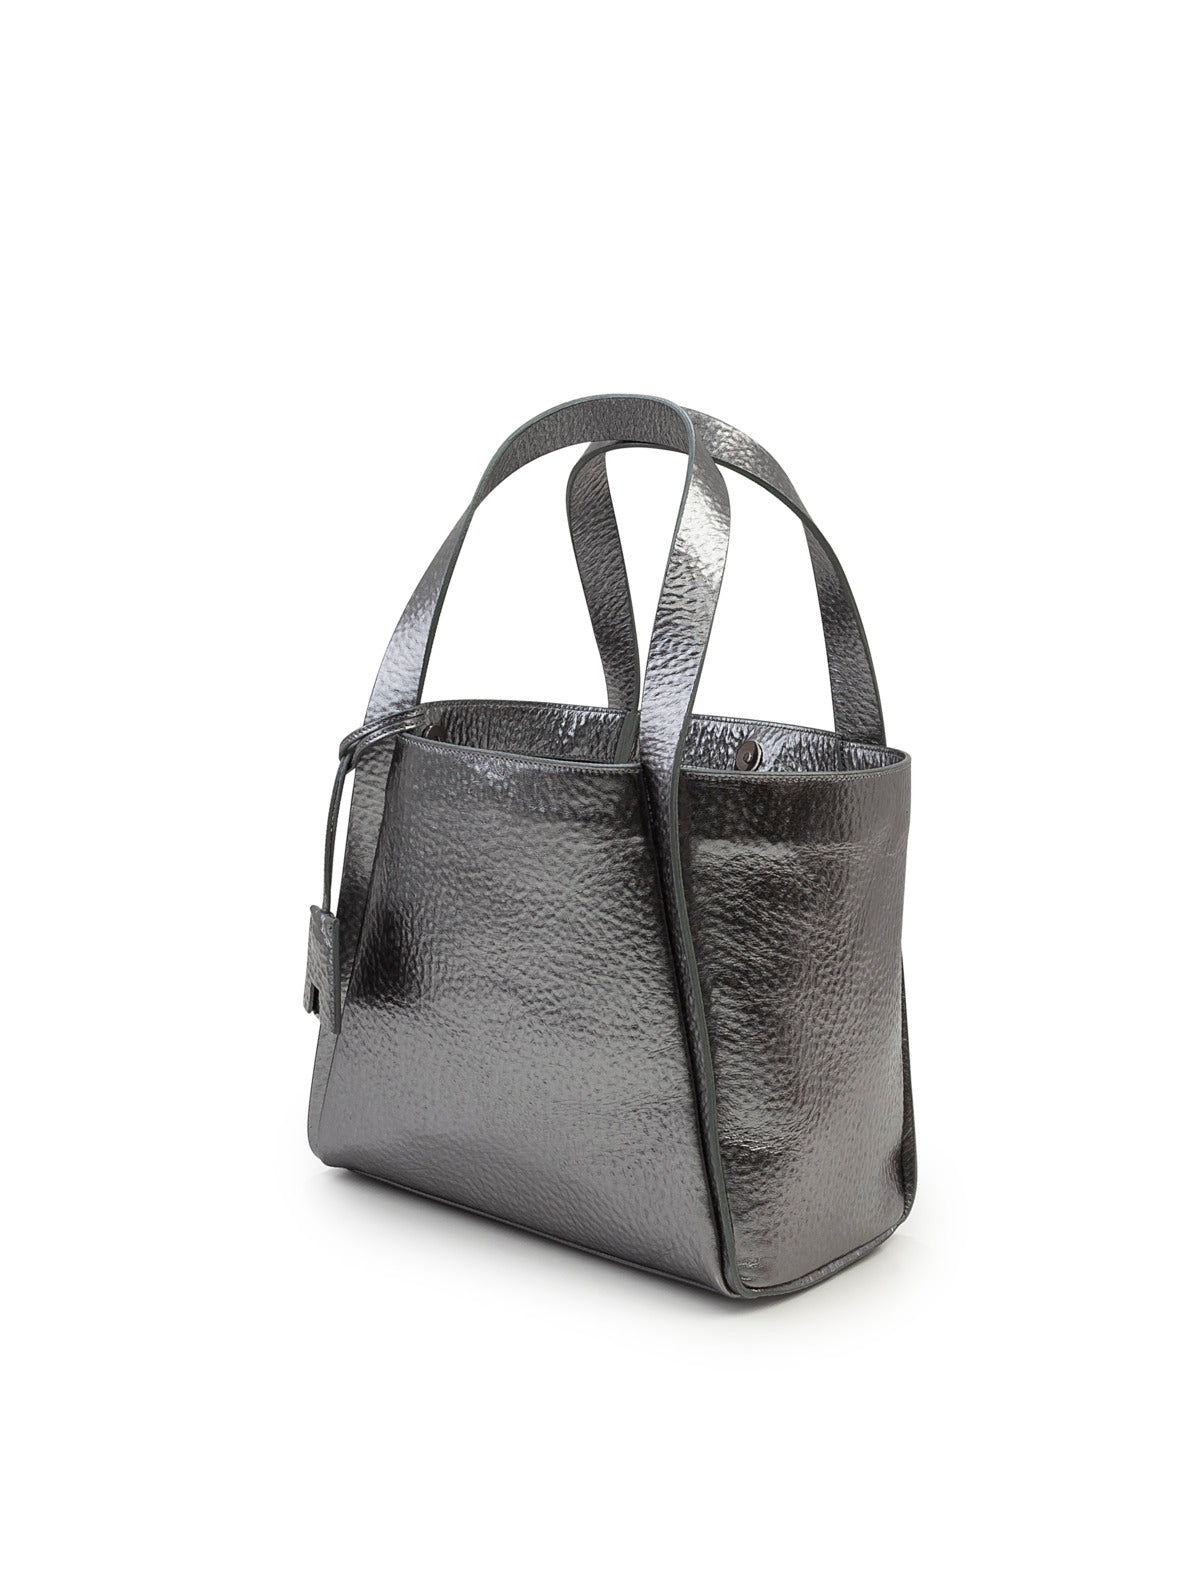 Modulo | Women's crossbody bag in leather color natural – Il Bisonte